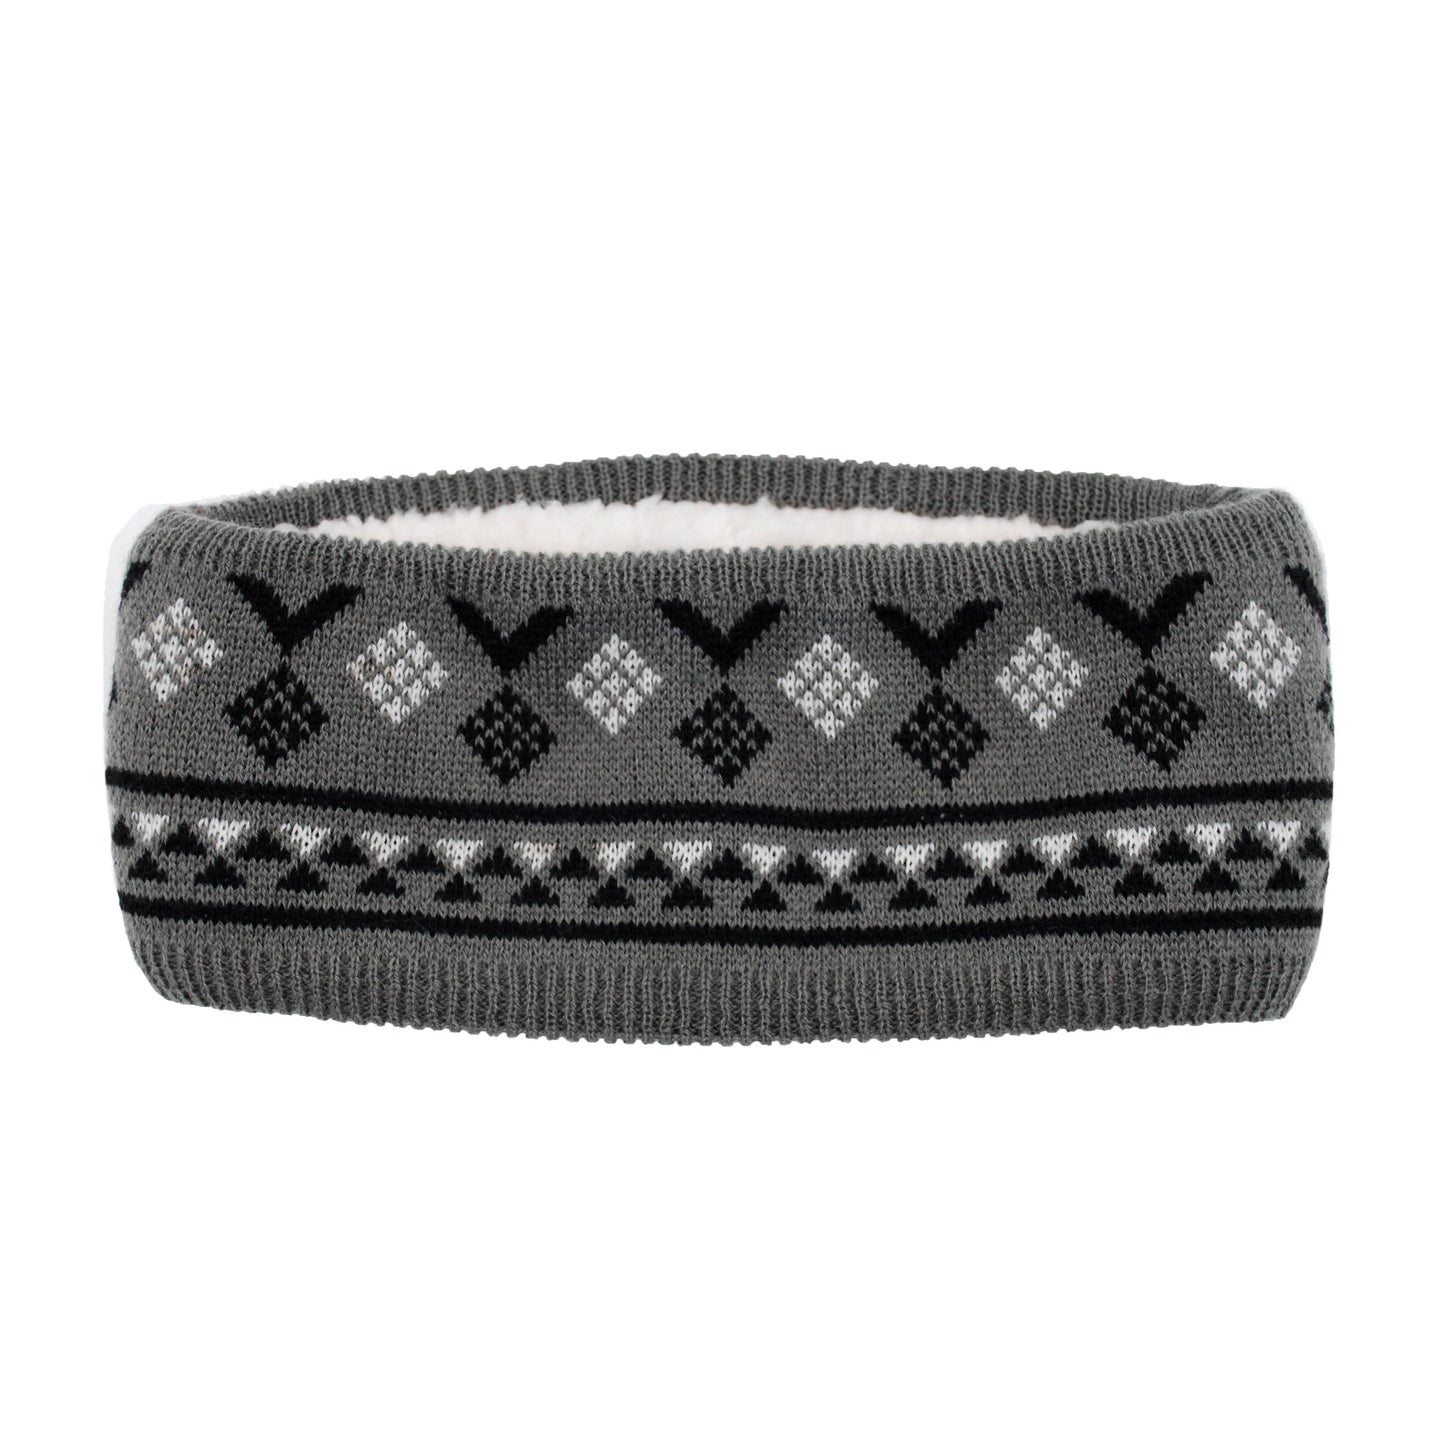 Pudus Classic Knit Winter Headband for Women, Fuzzy Fleece-Lined Ear Warmer Geometric Black - Headband Adult